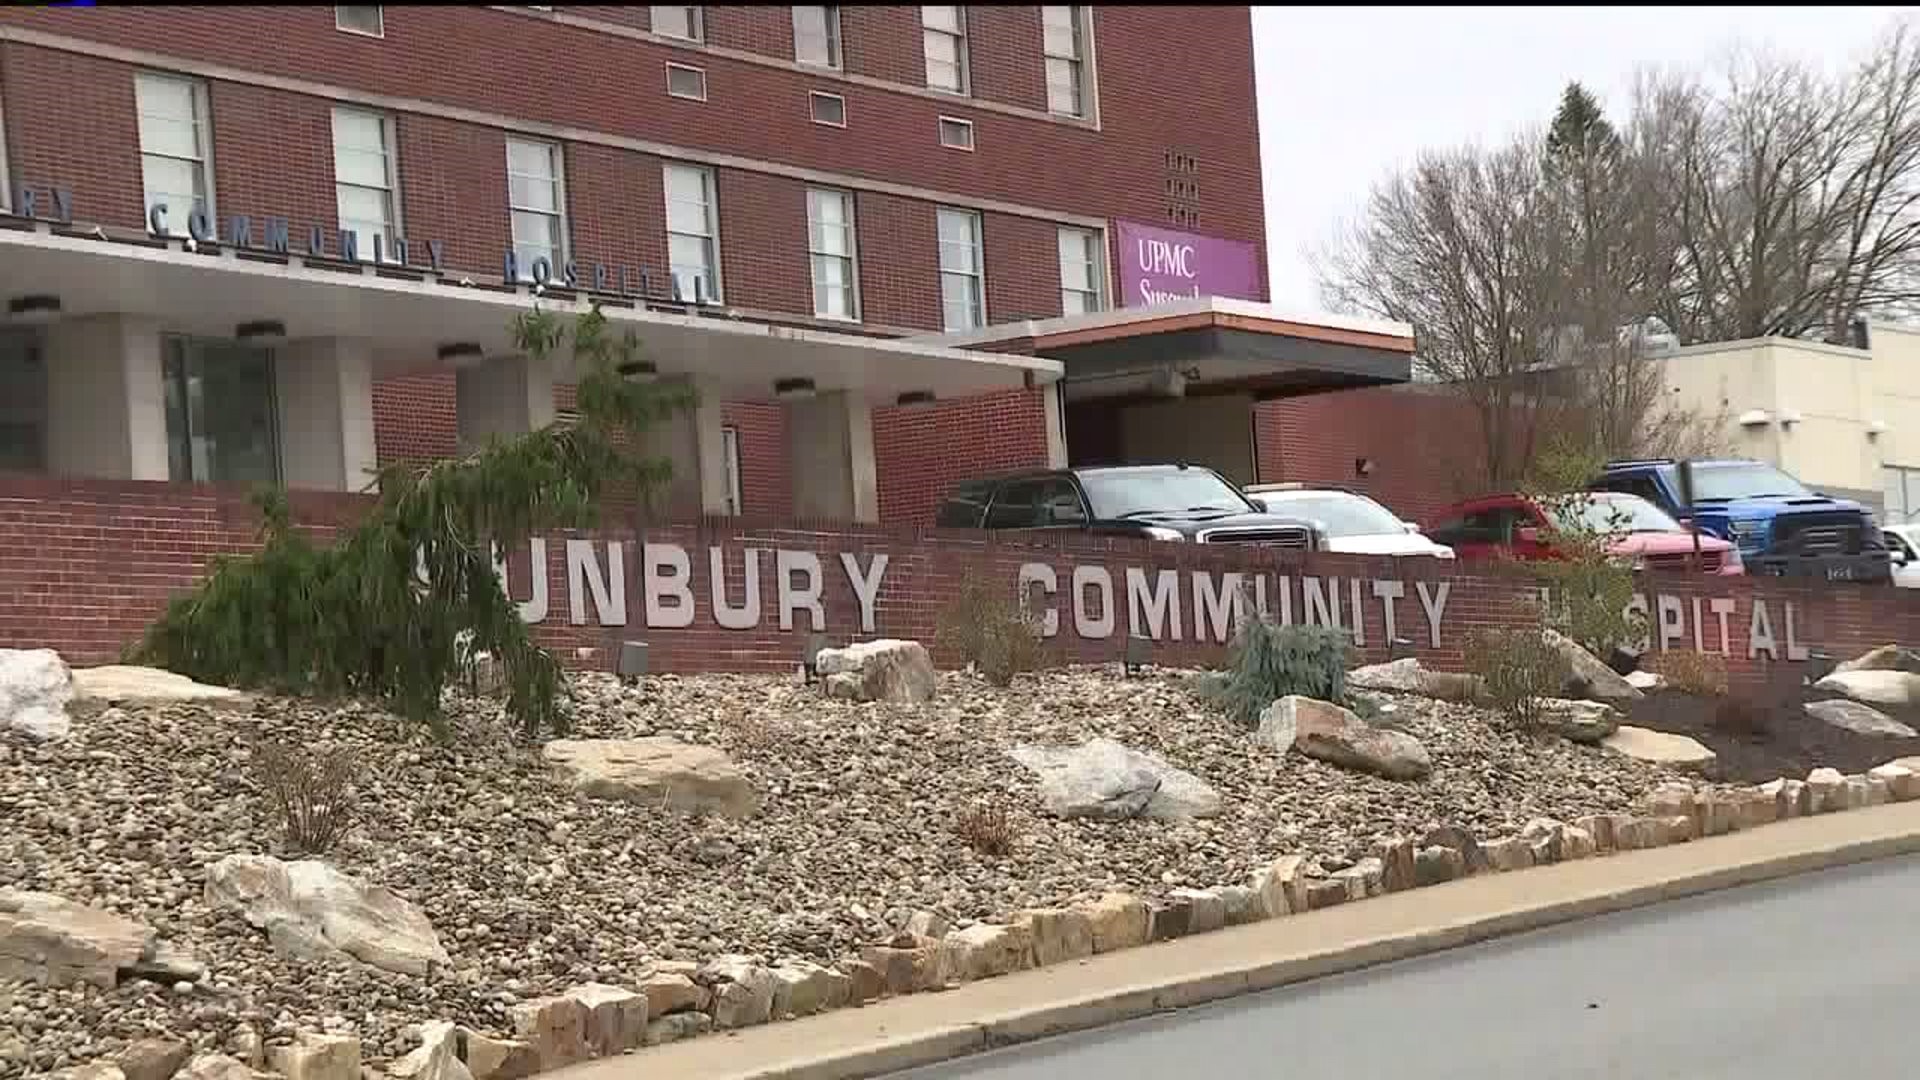 UPMC Susquehanna Sunbury to Close Next Year